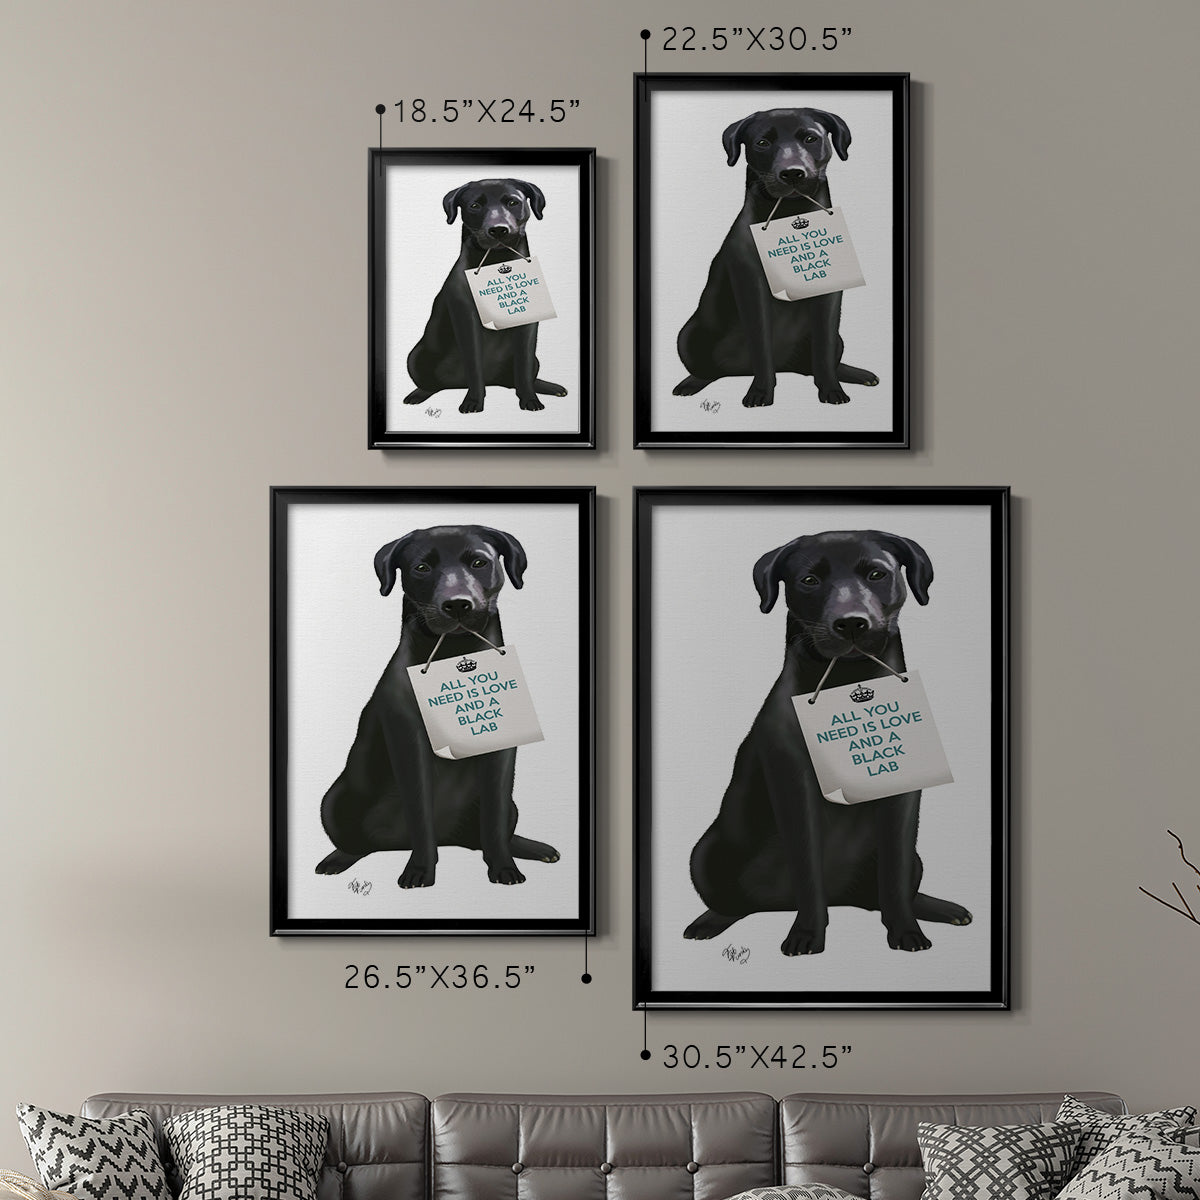 Love and Black Labrador Premium Framed Print - Ready to Hang